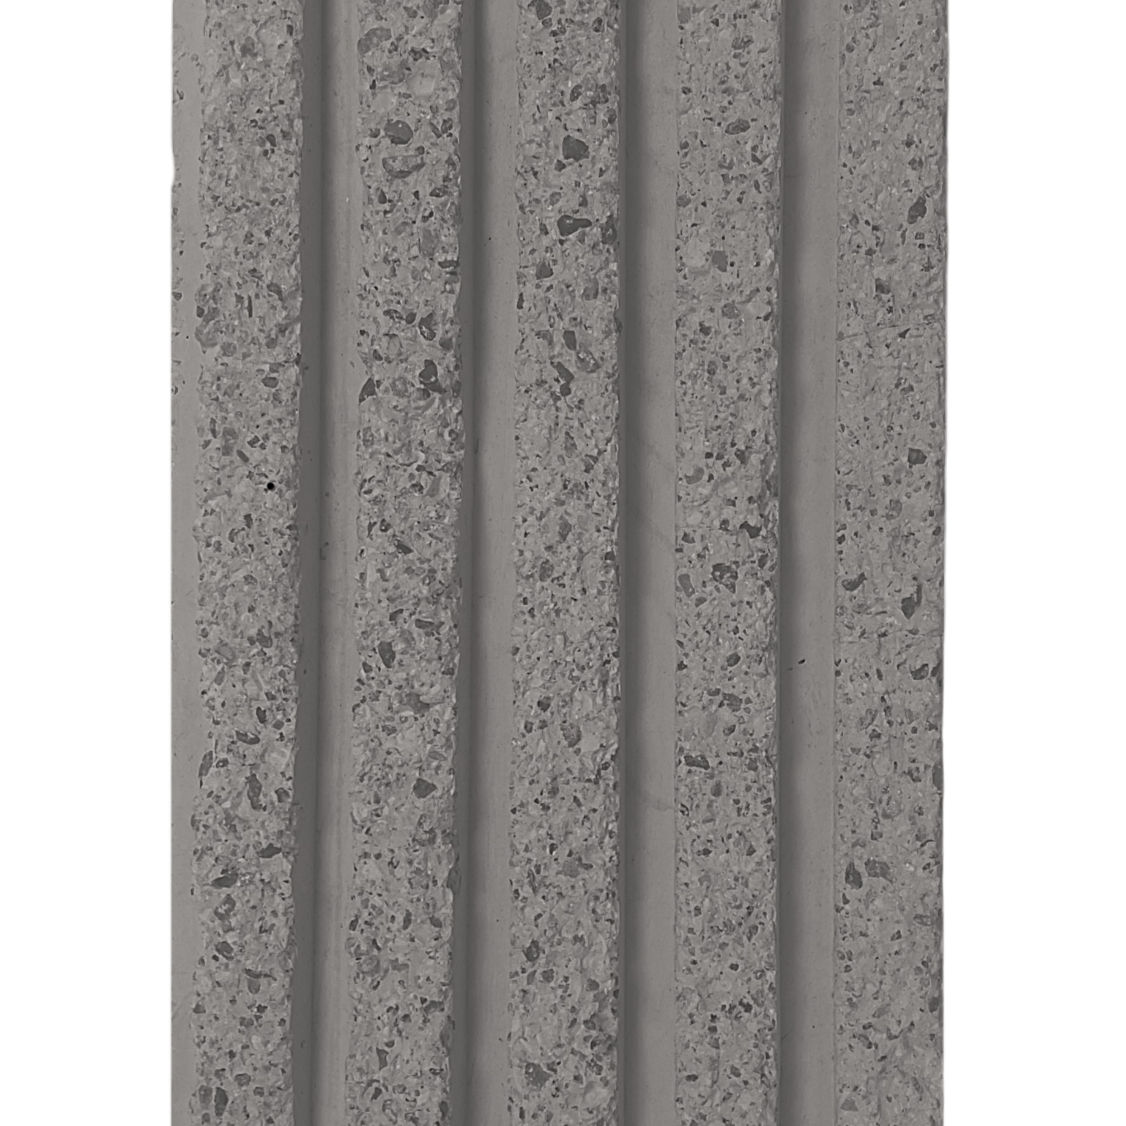 RealCast Fluted Concrete Panels - Medium Grey